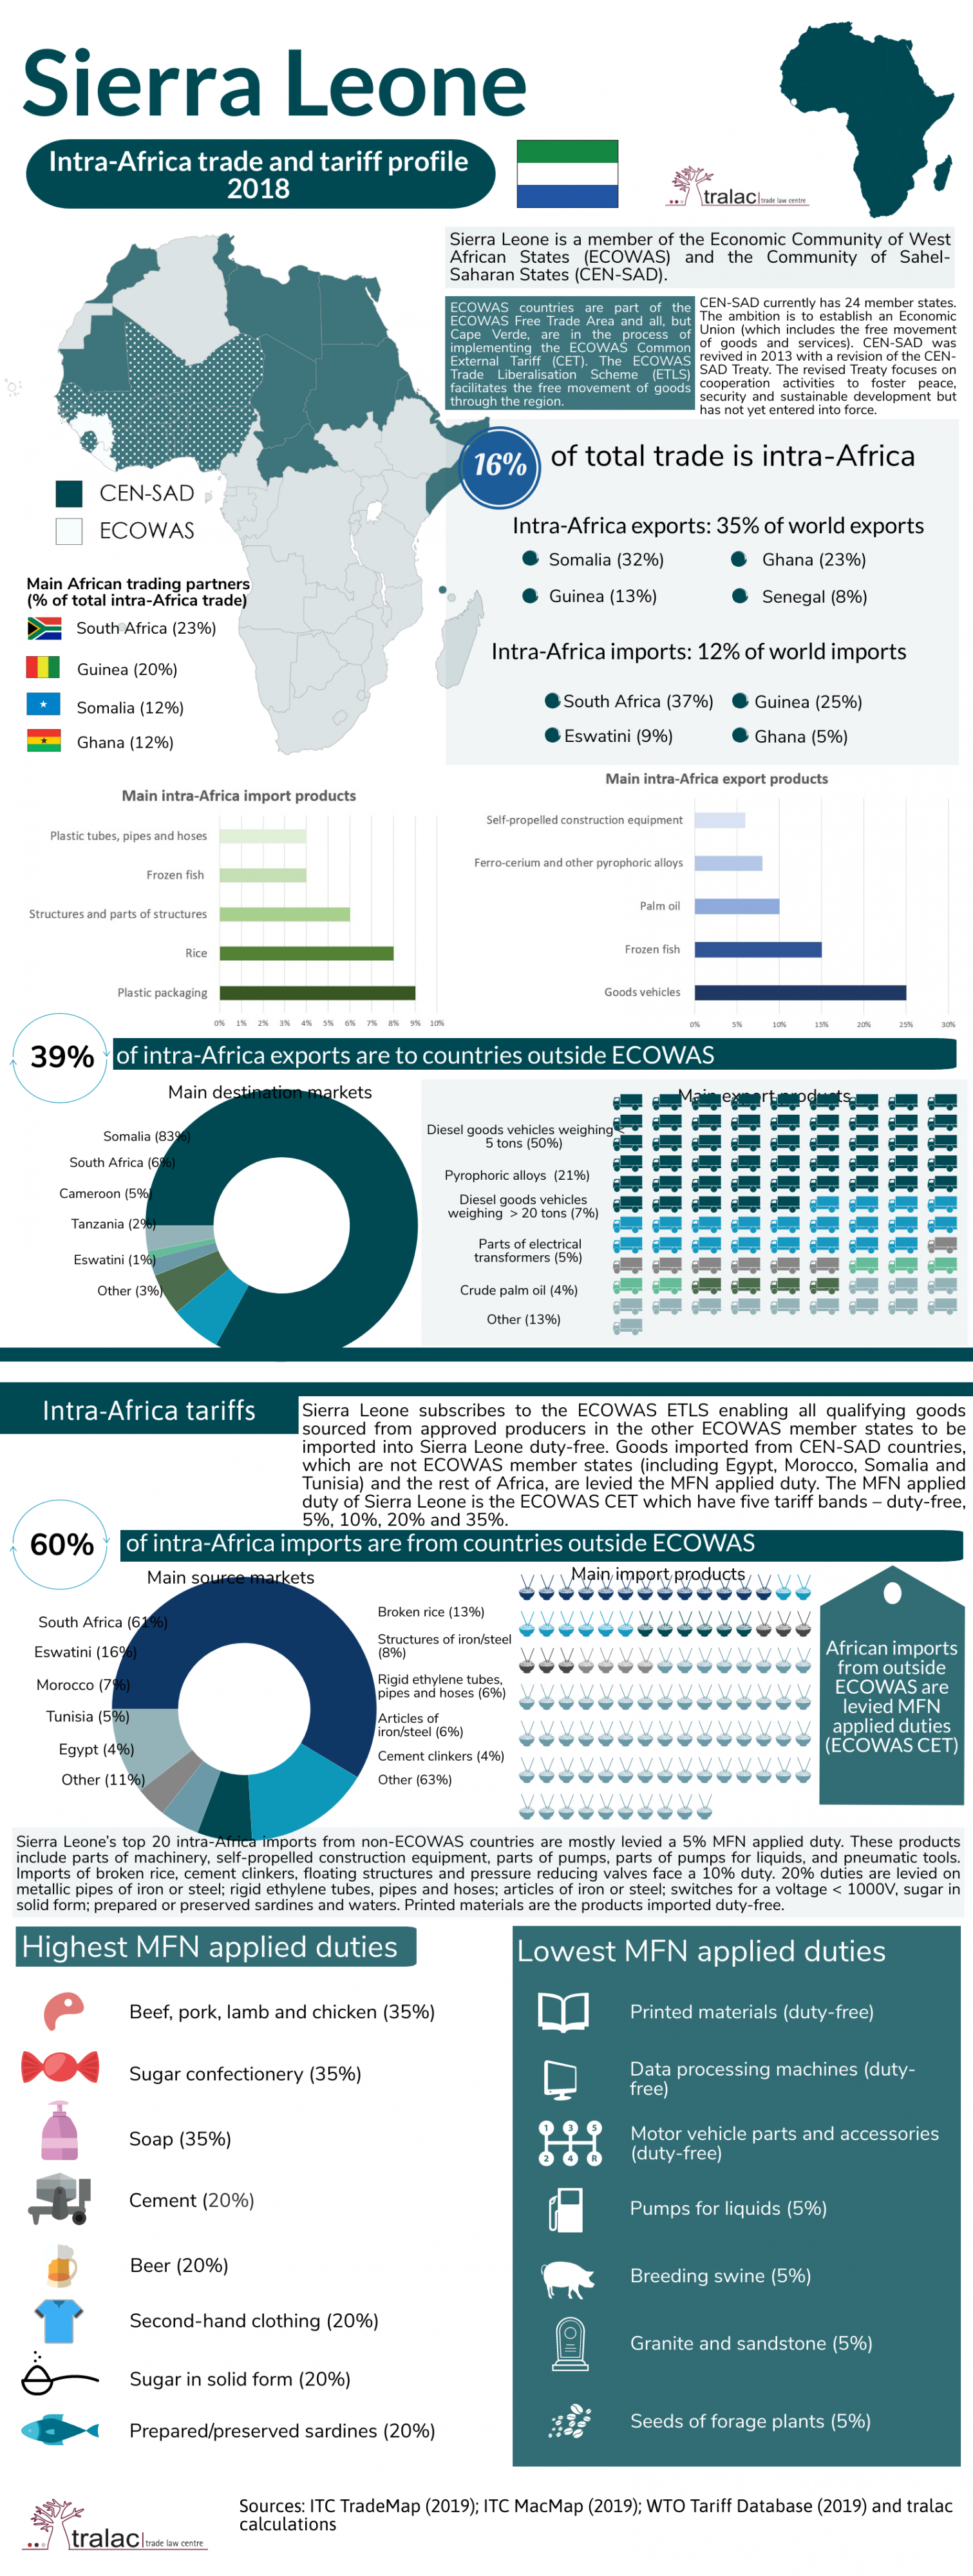 Sierra Leone: 2018 Intra-Africa trade and tariff profile